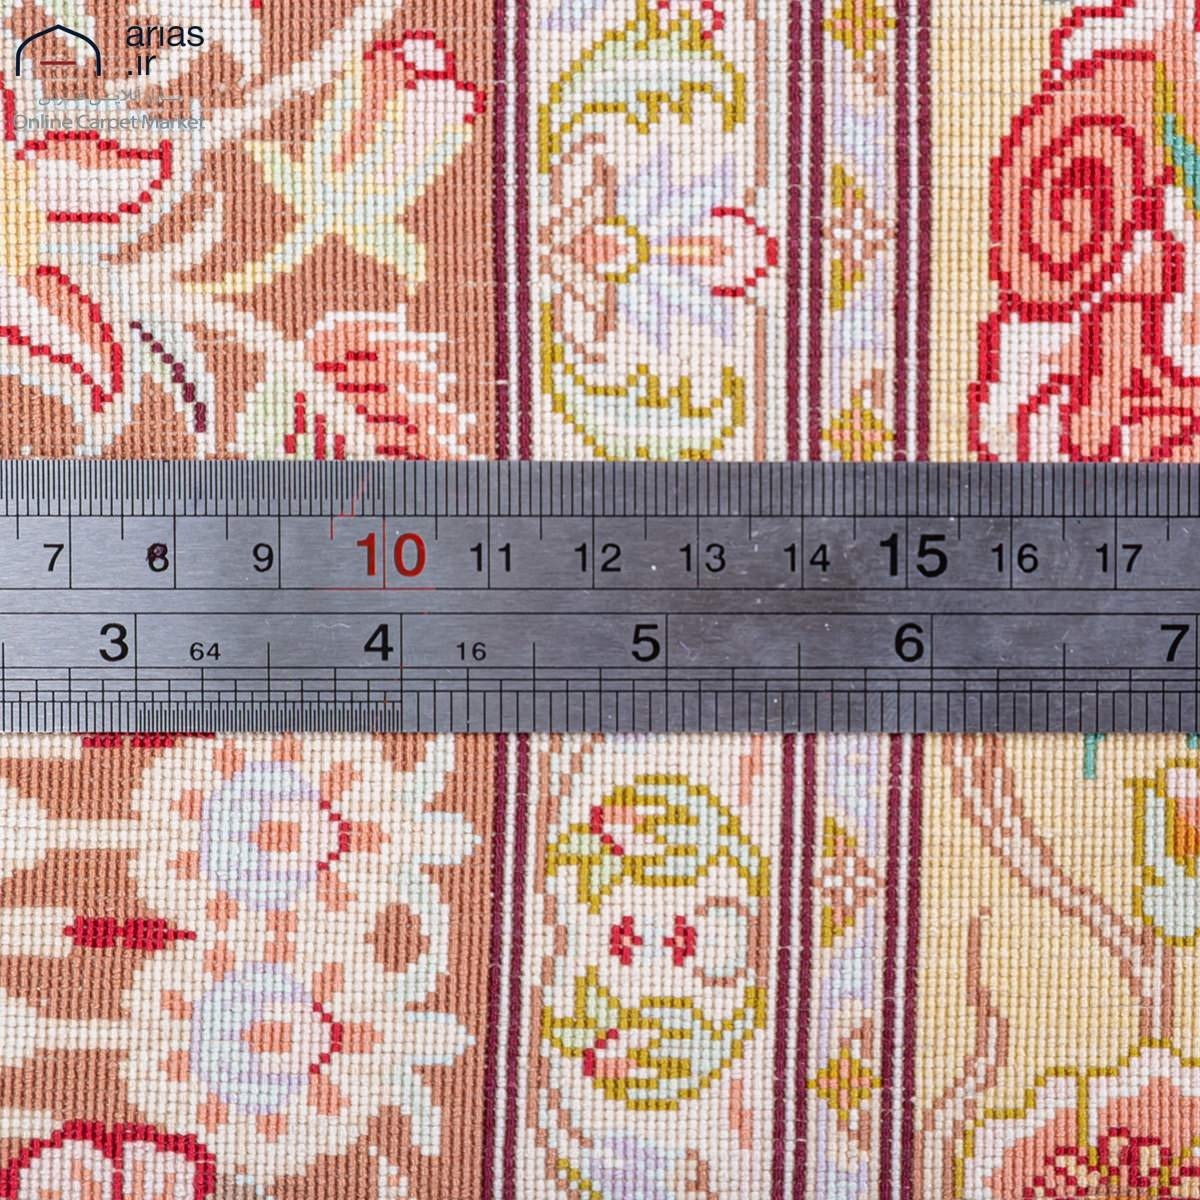 فرش دستباف ذرع و نیم تمام ابریشم طرح لچک ترنج مارک جواهری بافت قم کد D02245G